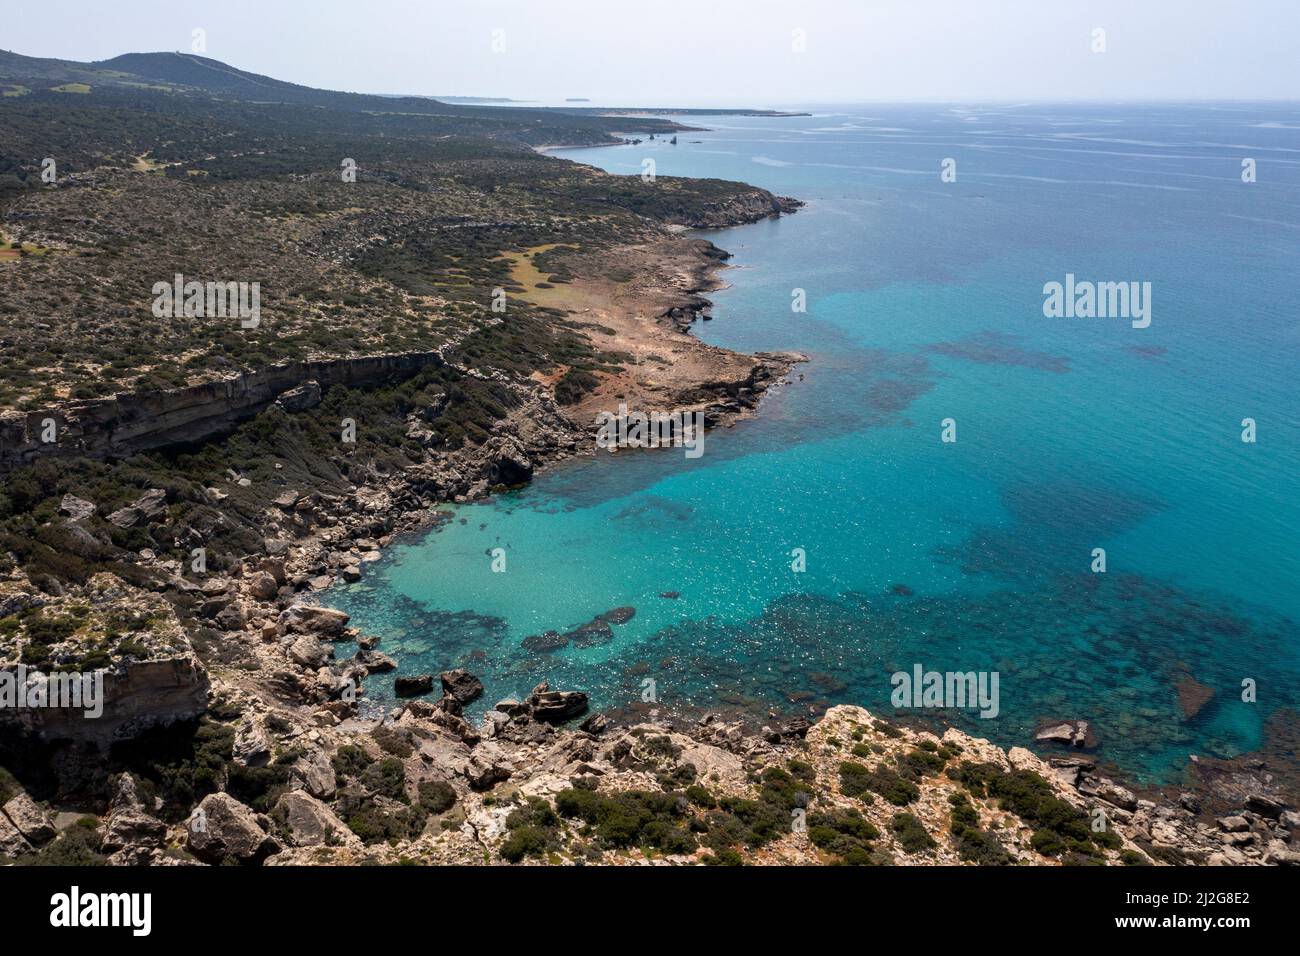 Vista aerea della costa meridionale del Parco Nazionale Akamas, regione di Paphos, Cipro. Foto Stock